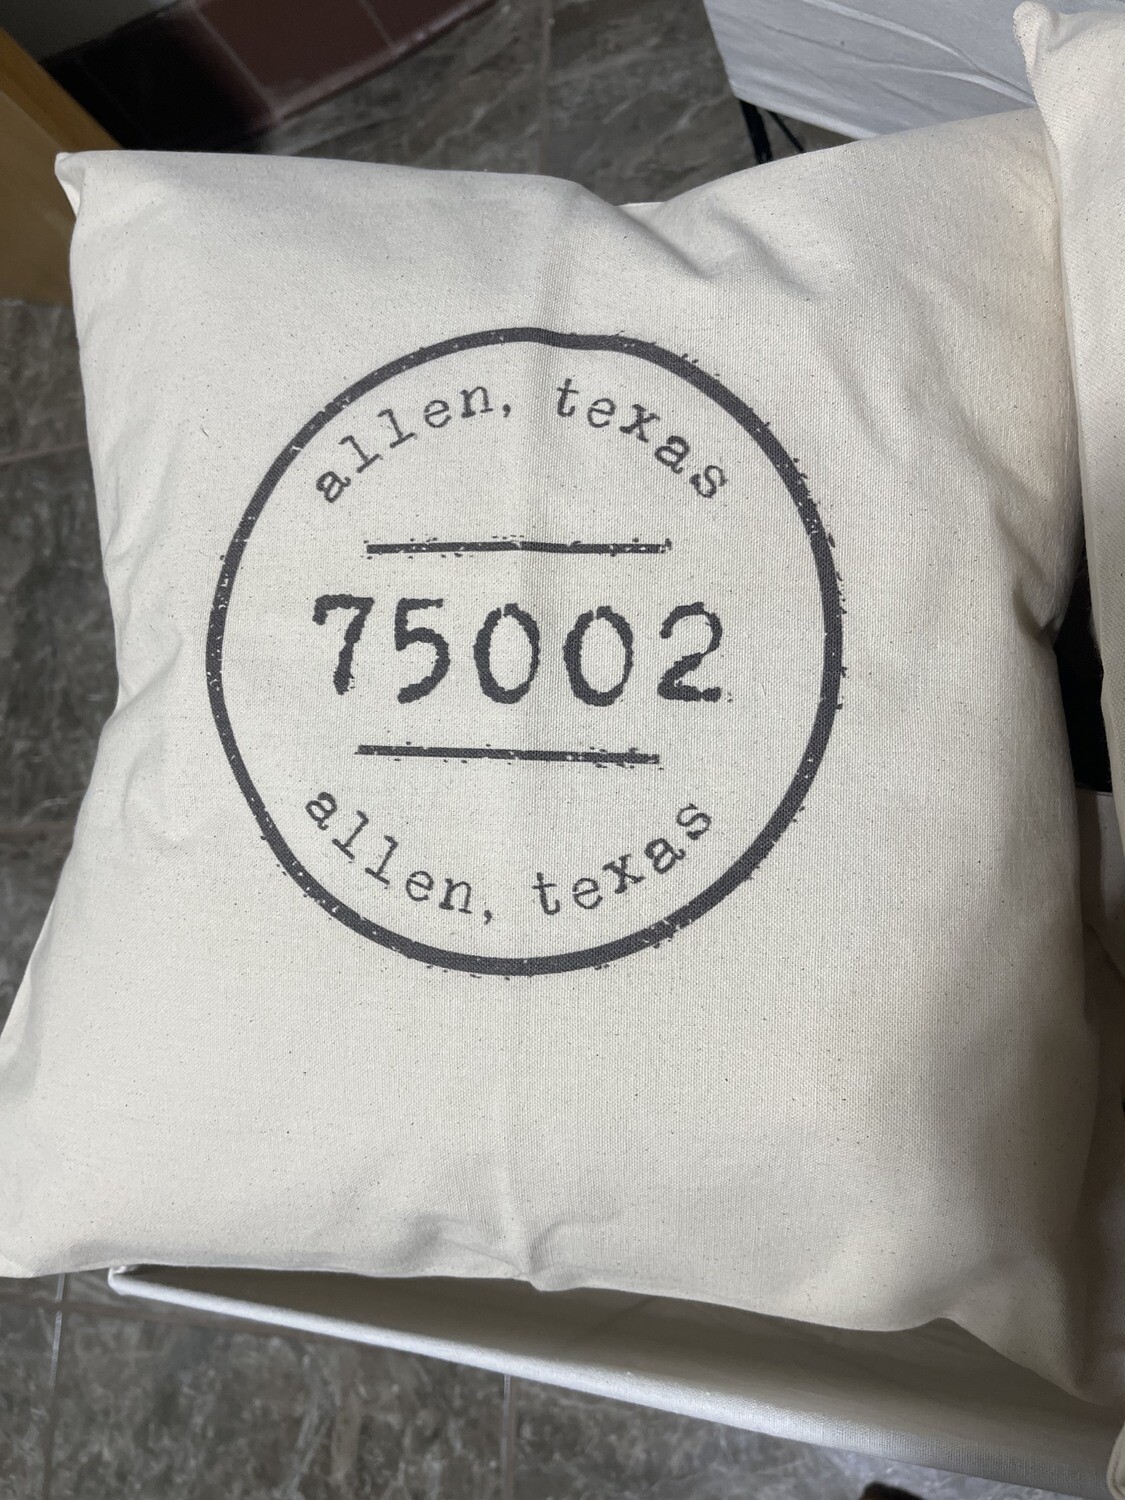 Allen Zip Code Pillows 